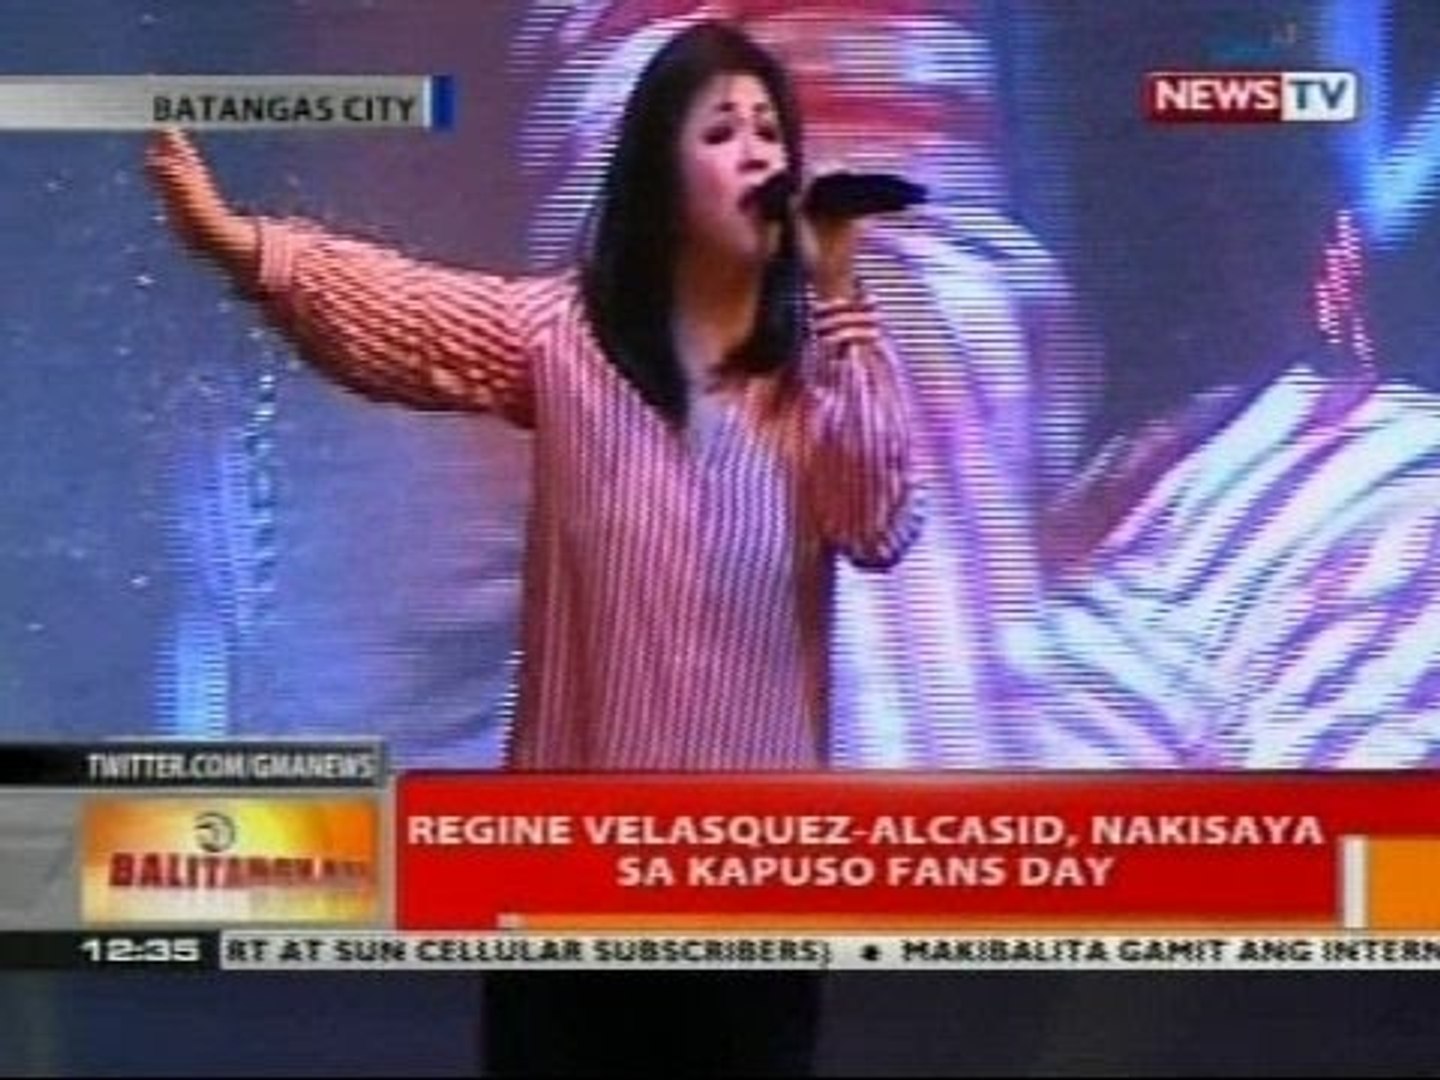 BT: Regine Velasquez-Alcasid, nakisaya sa Kapuso fans day